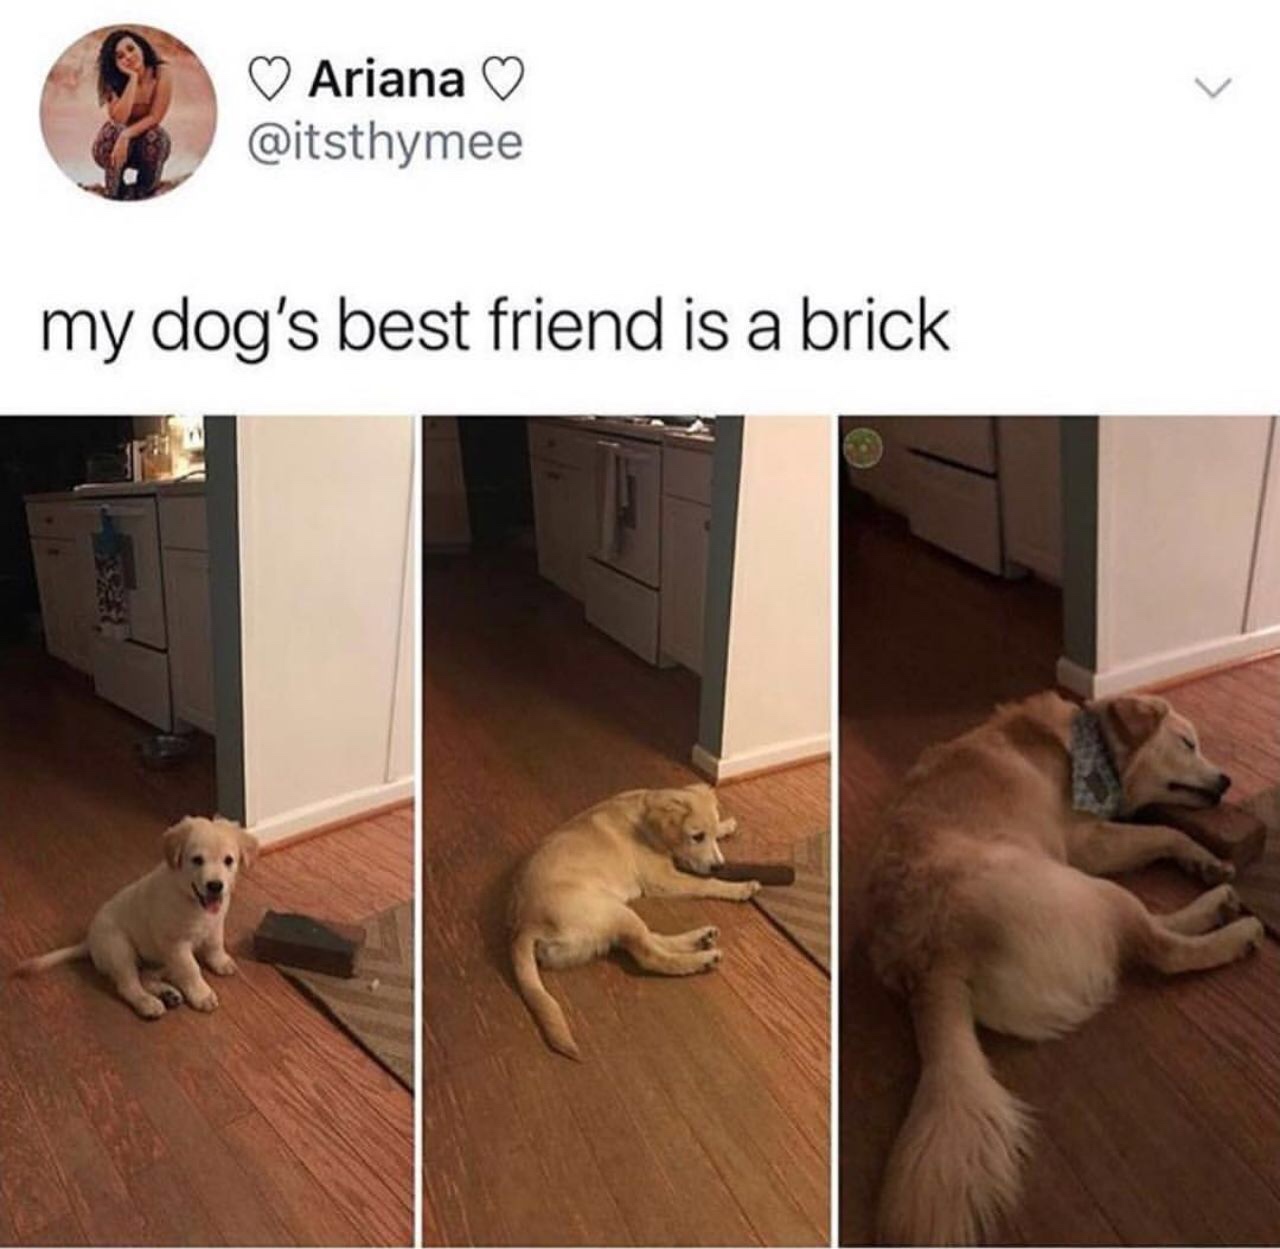 cuddling with your best friend - Ariana my dog's best friend is a brick